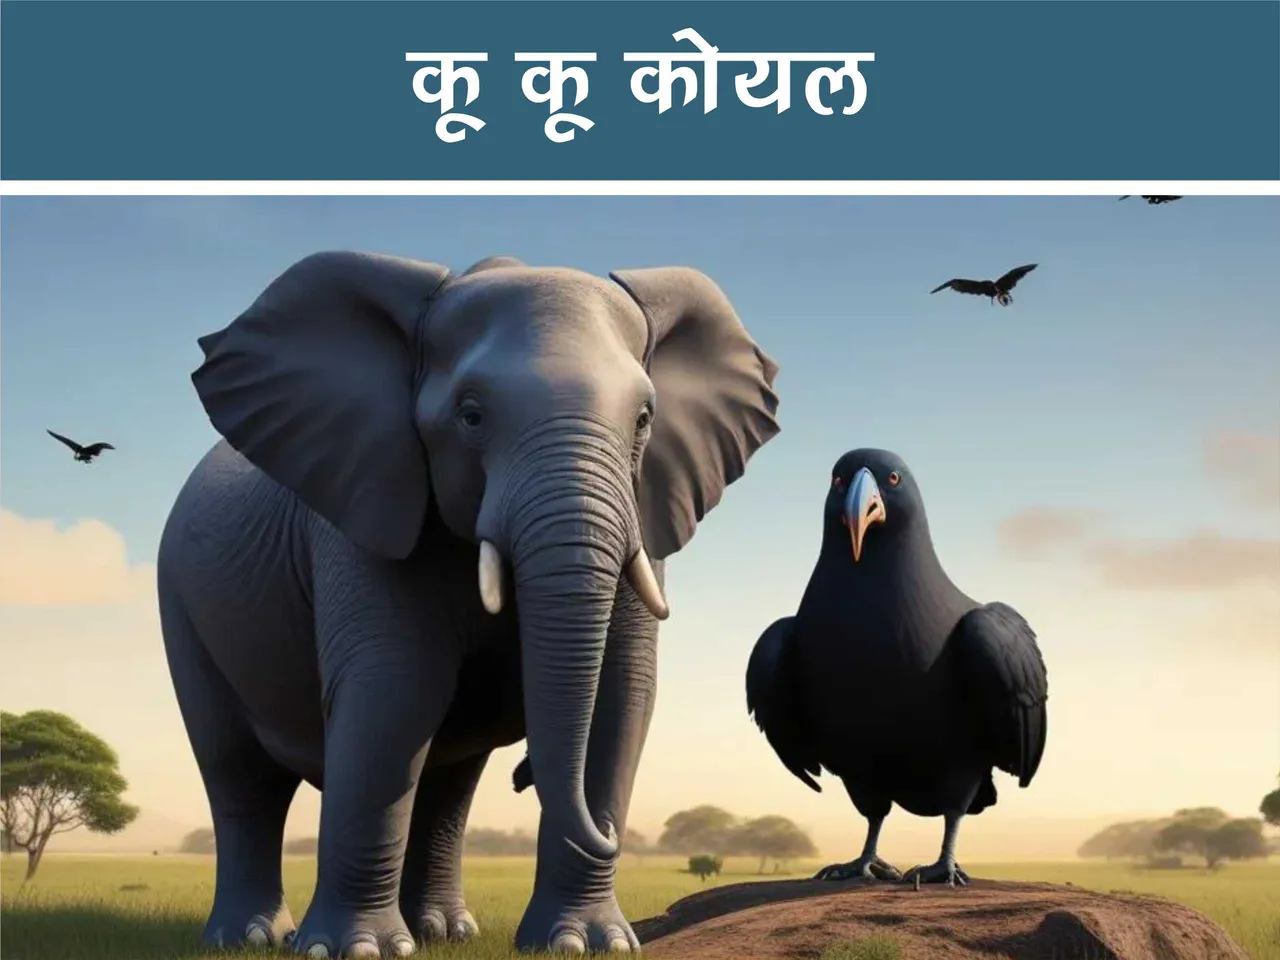 Elephant with Cuckoo cartoon image